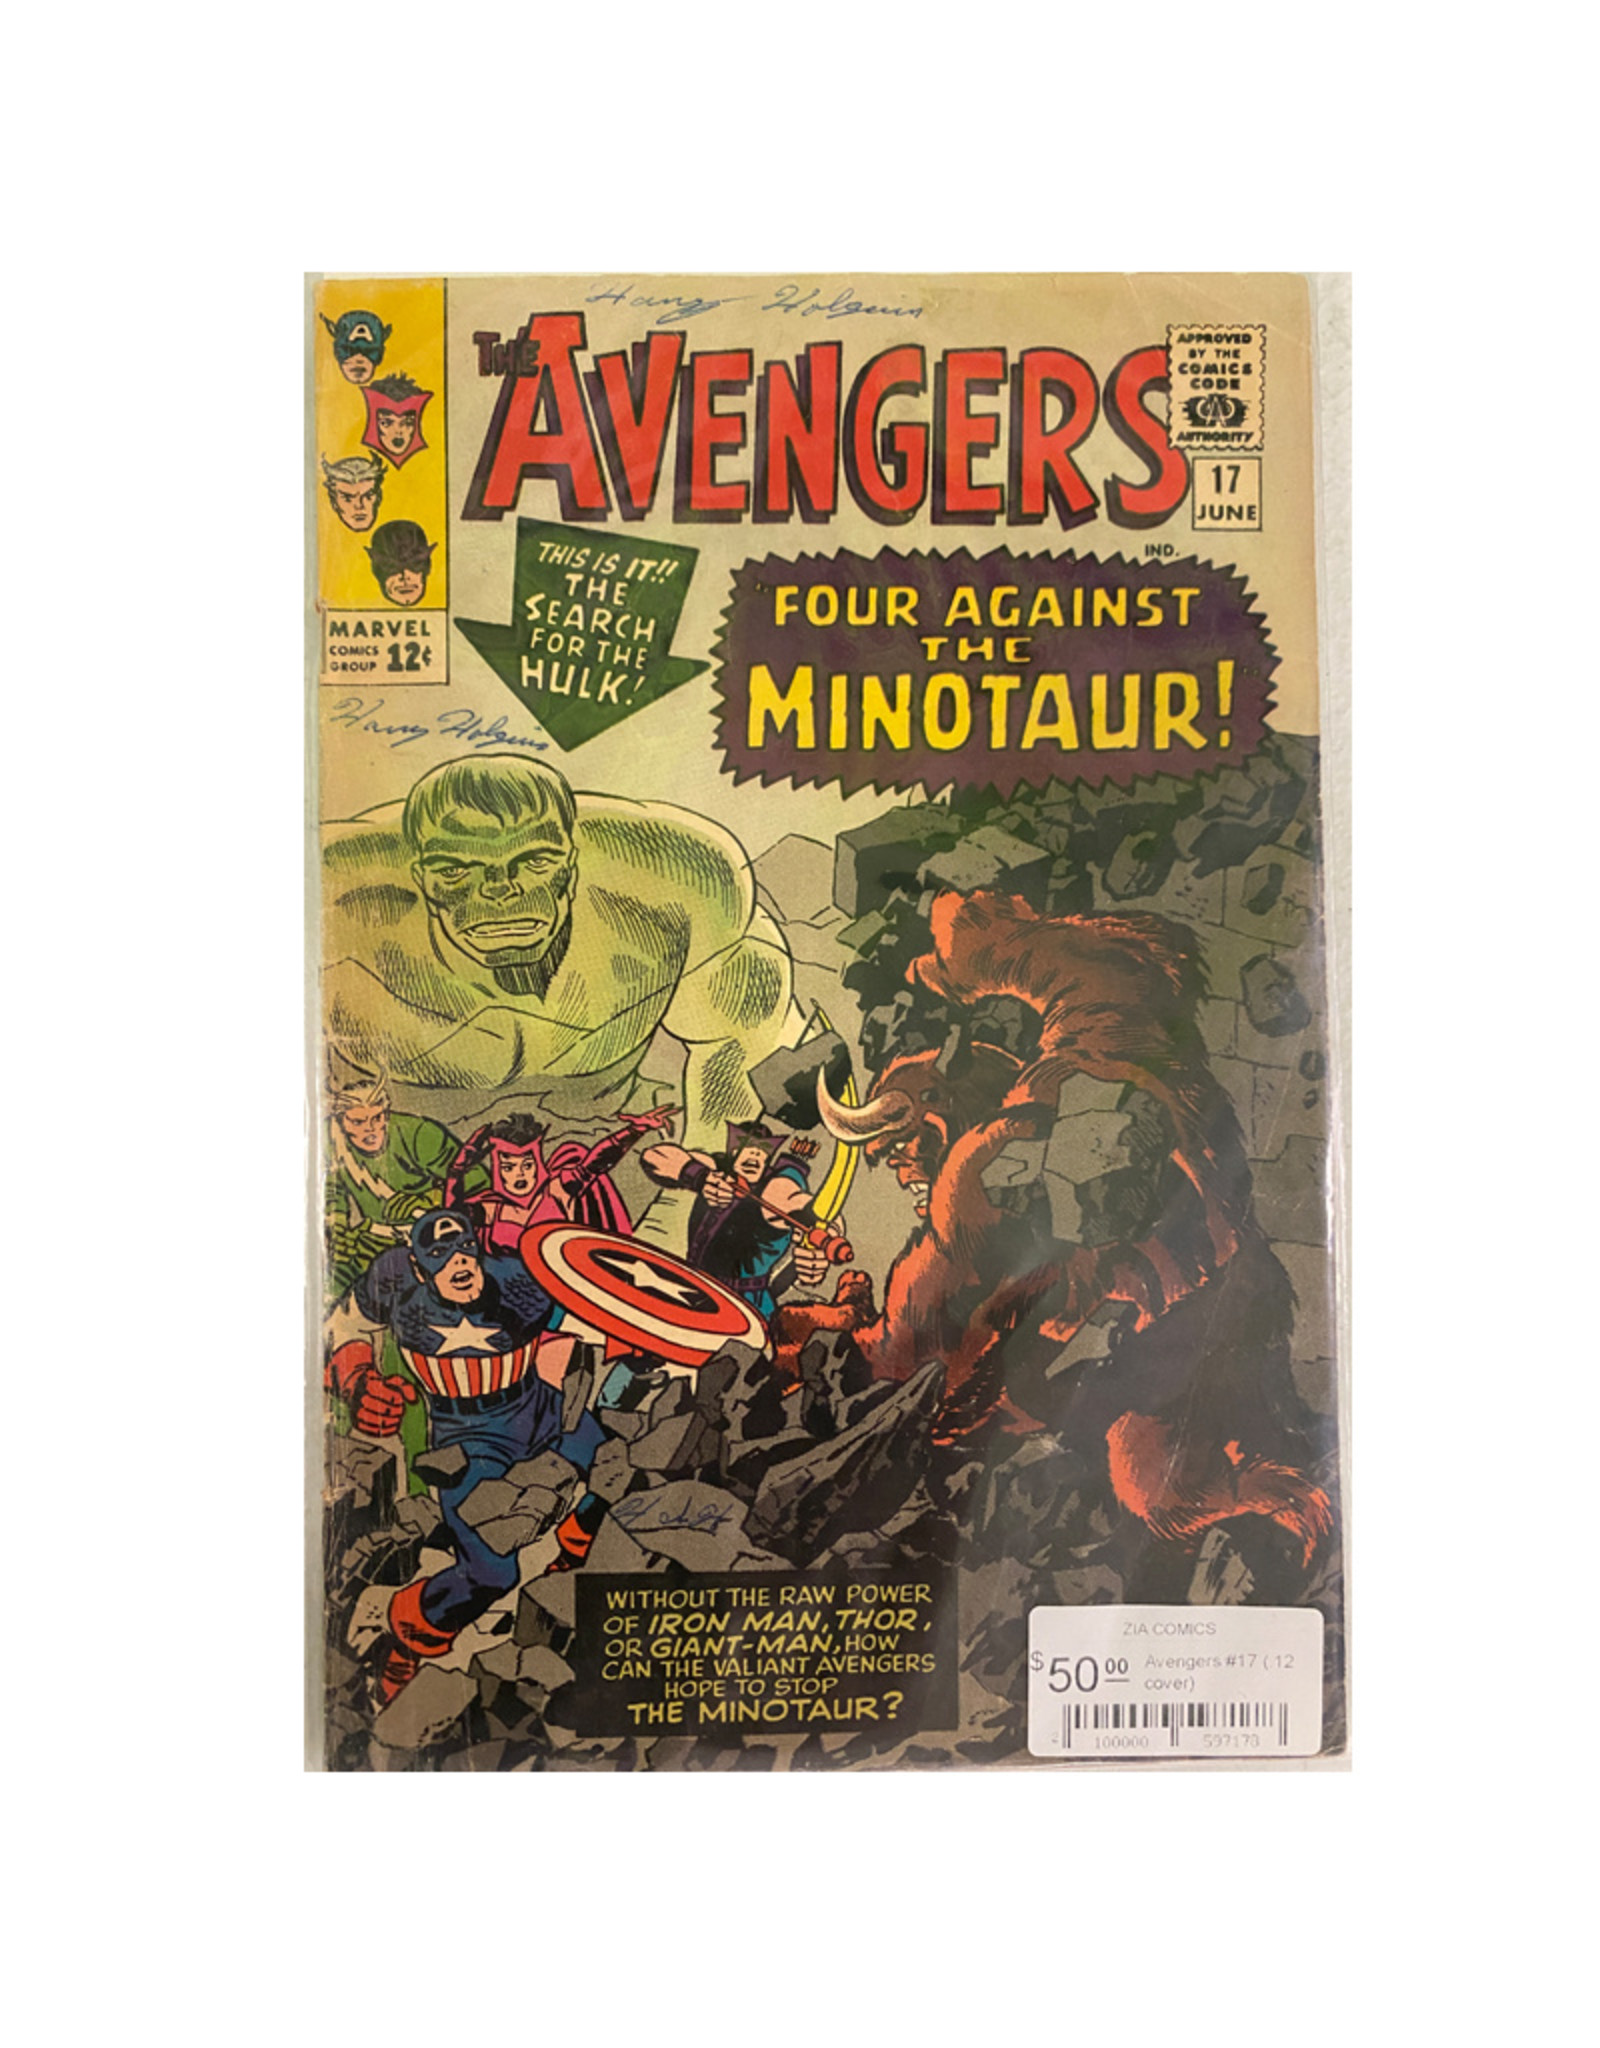 Marvel Comics Avengers #17 (.12 cover)